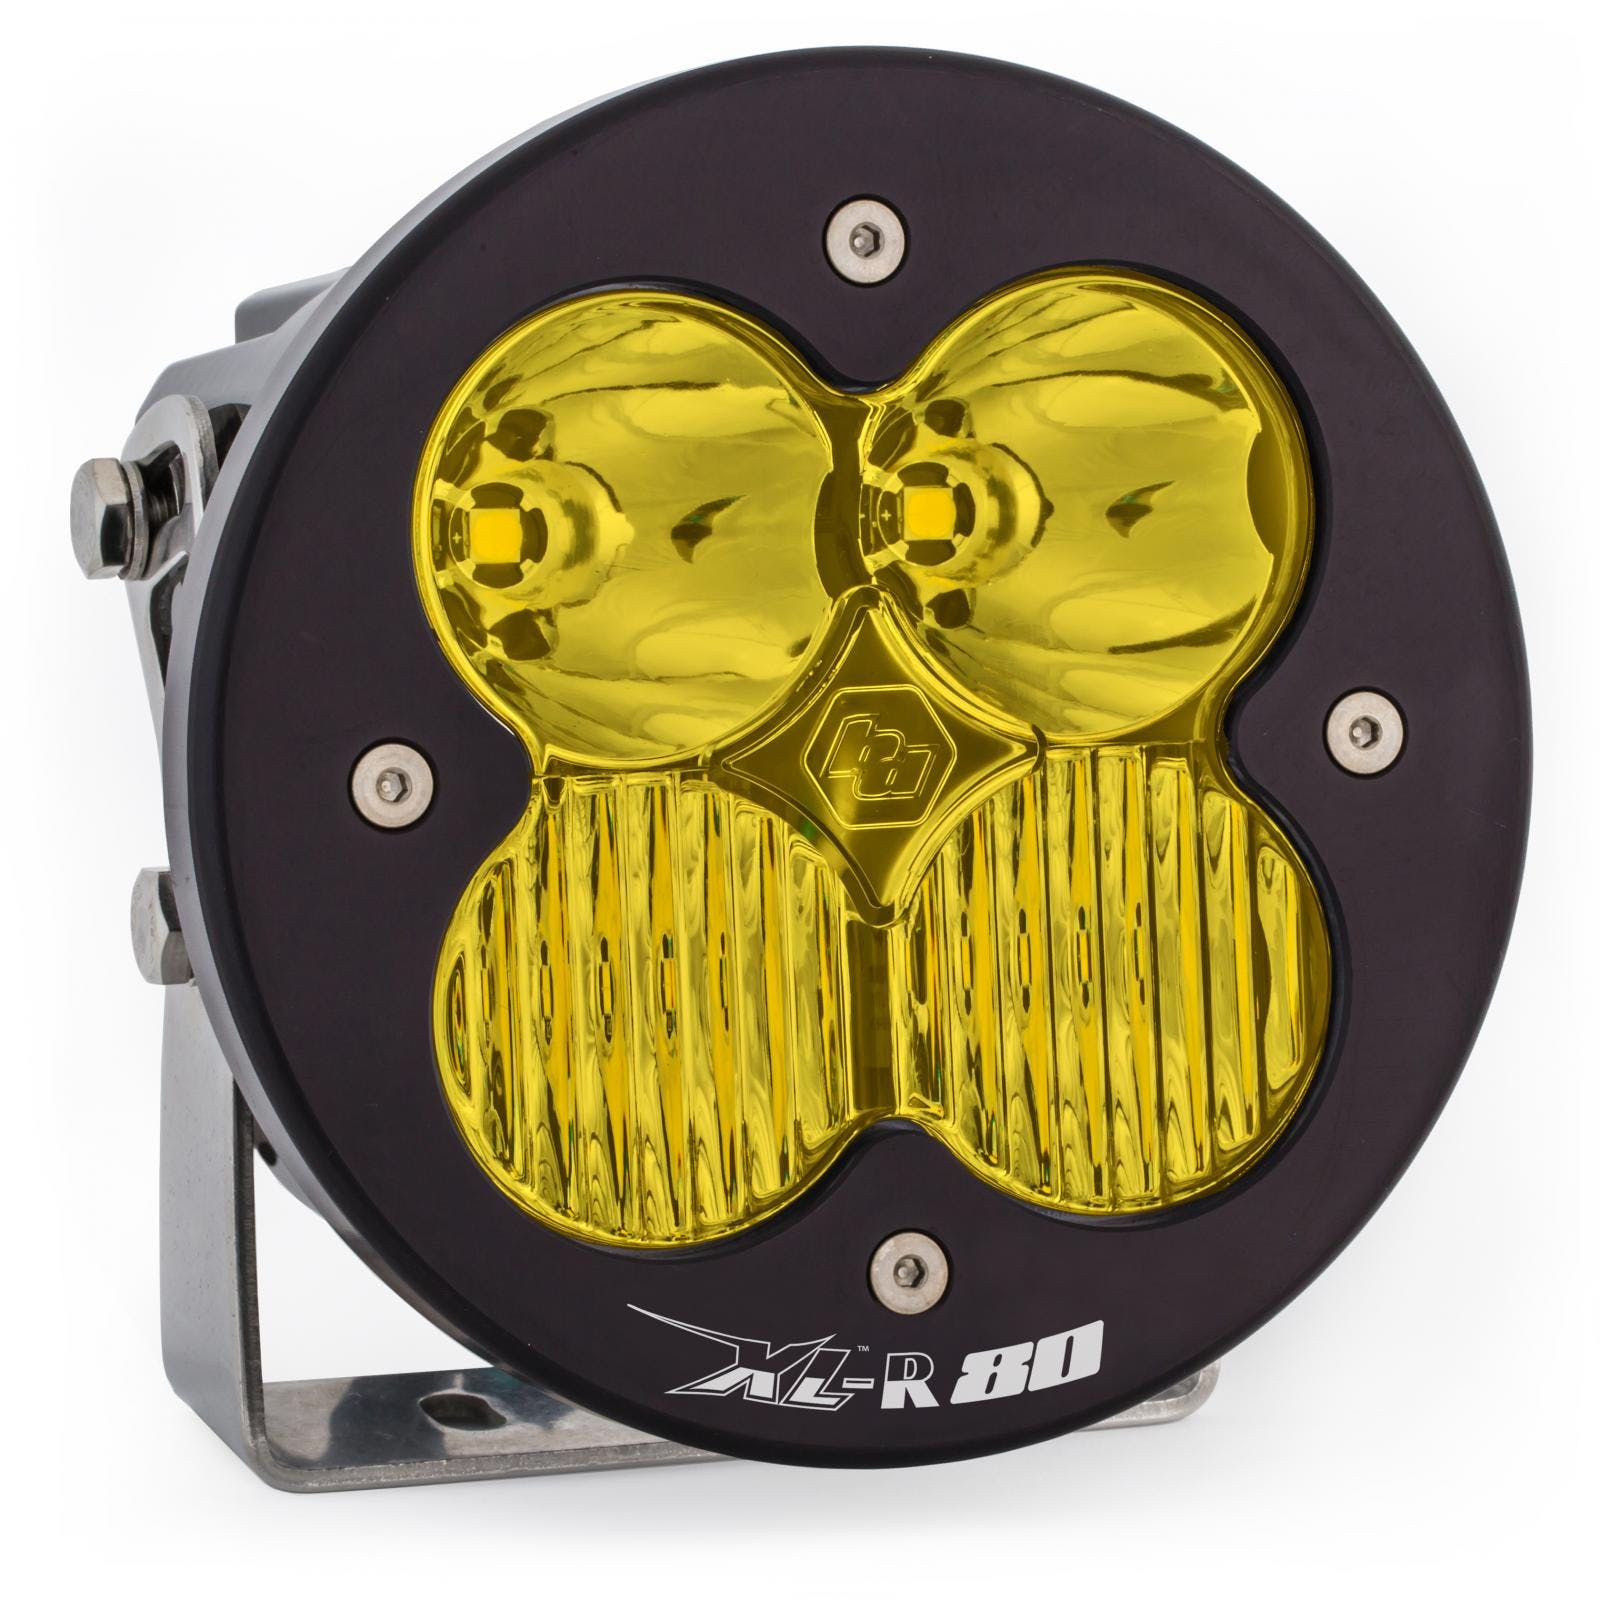 Baja Designs 760013 LED Light Pods Amber Lens Spot Each XL R 80 Driving/Combo